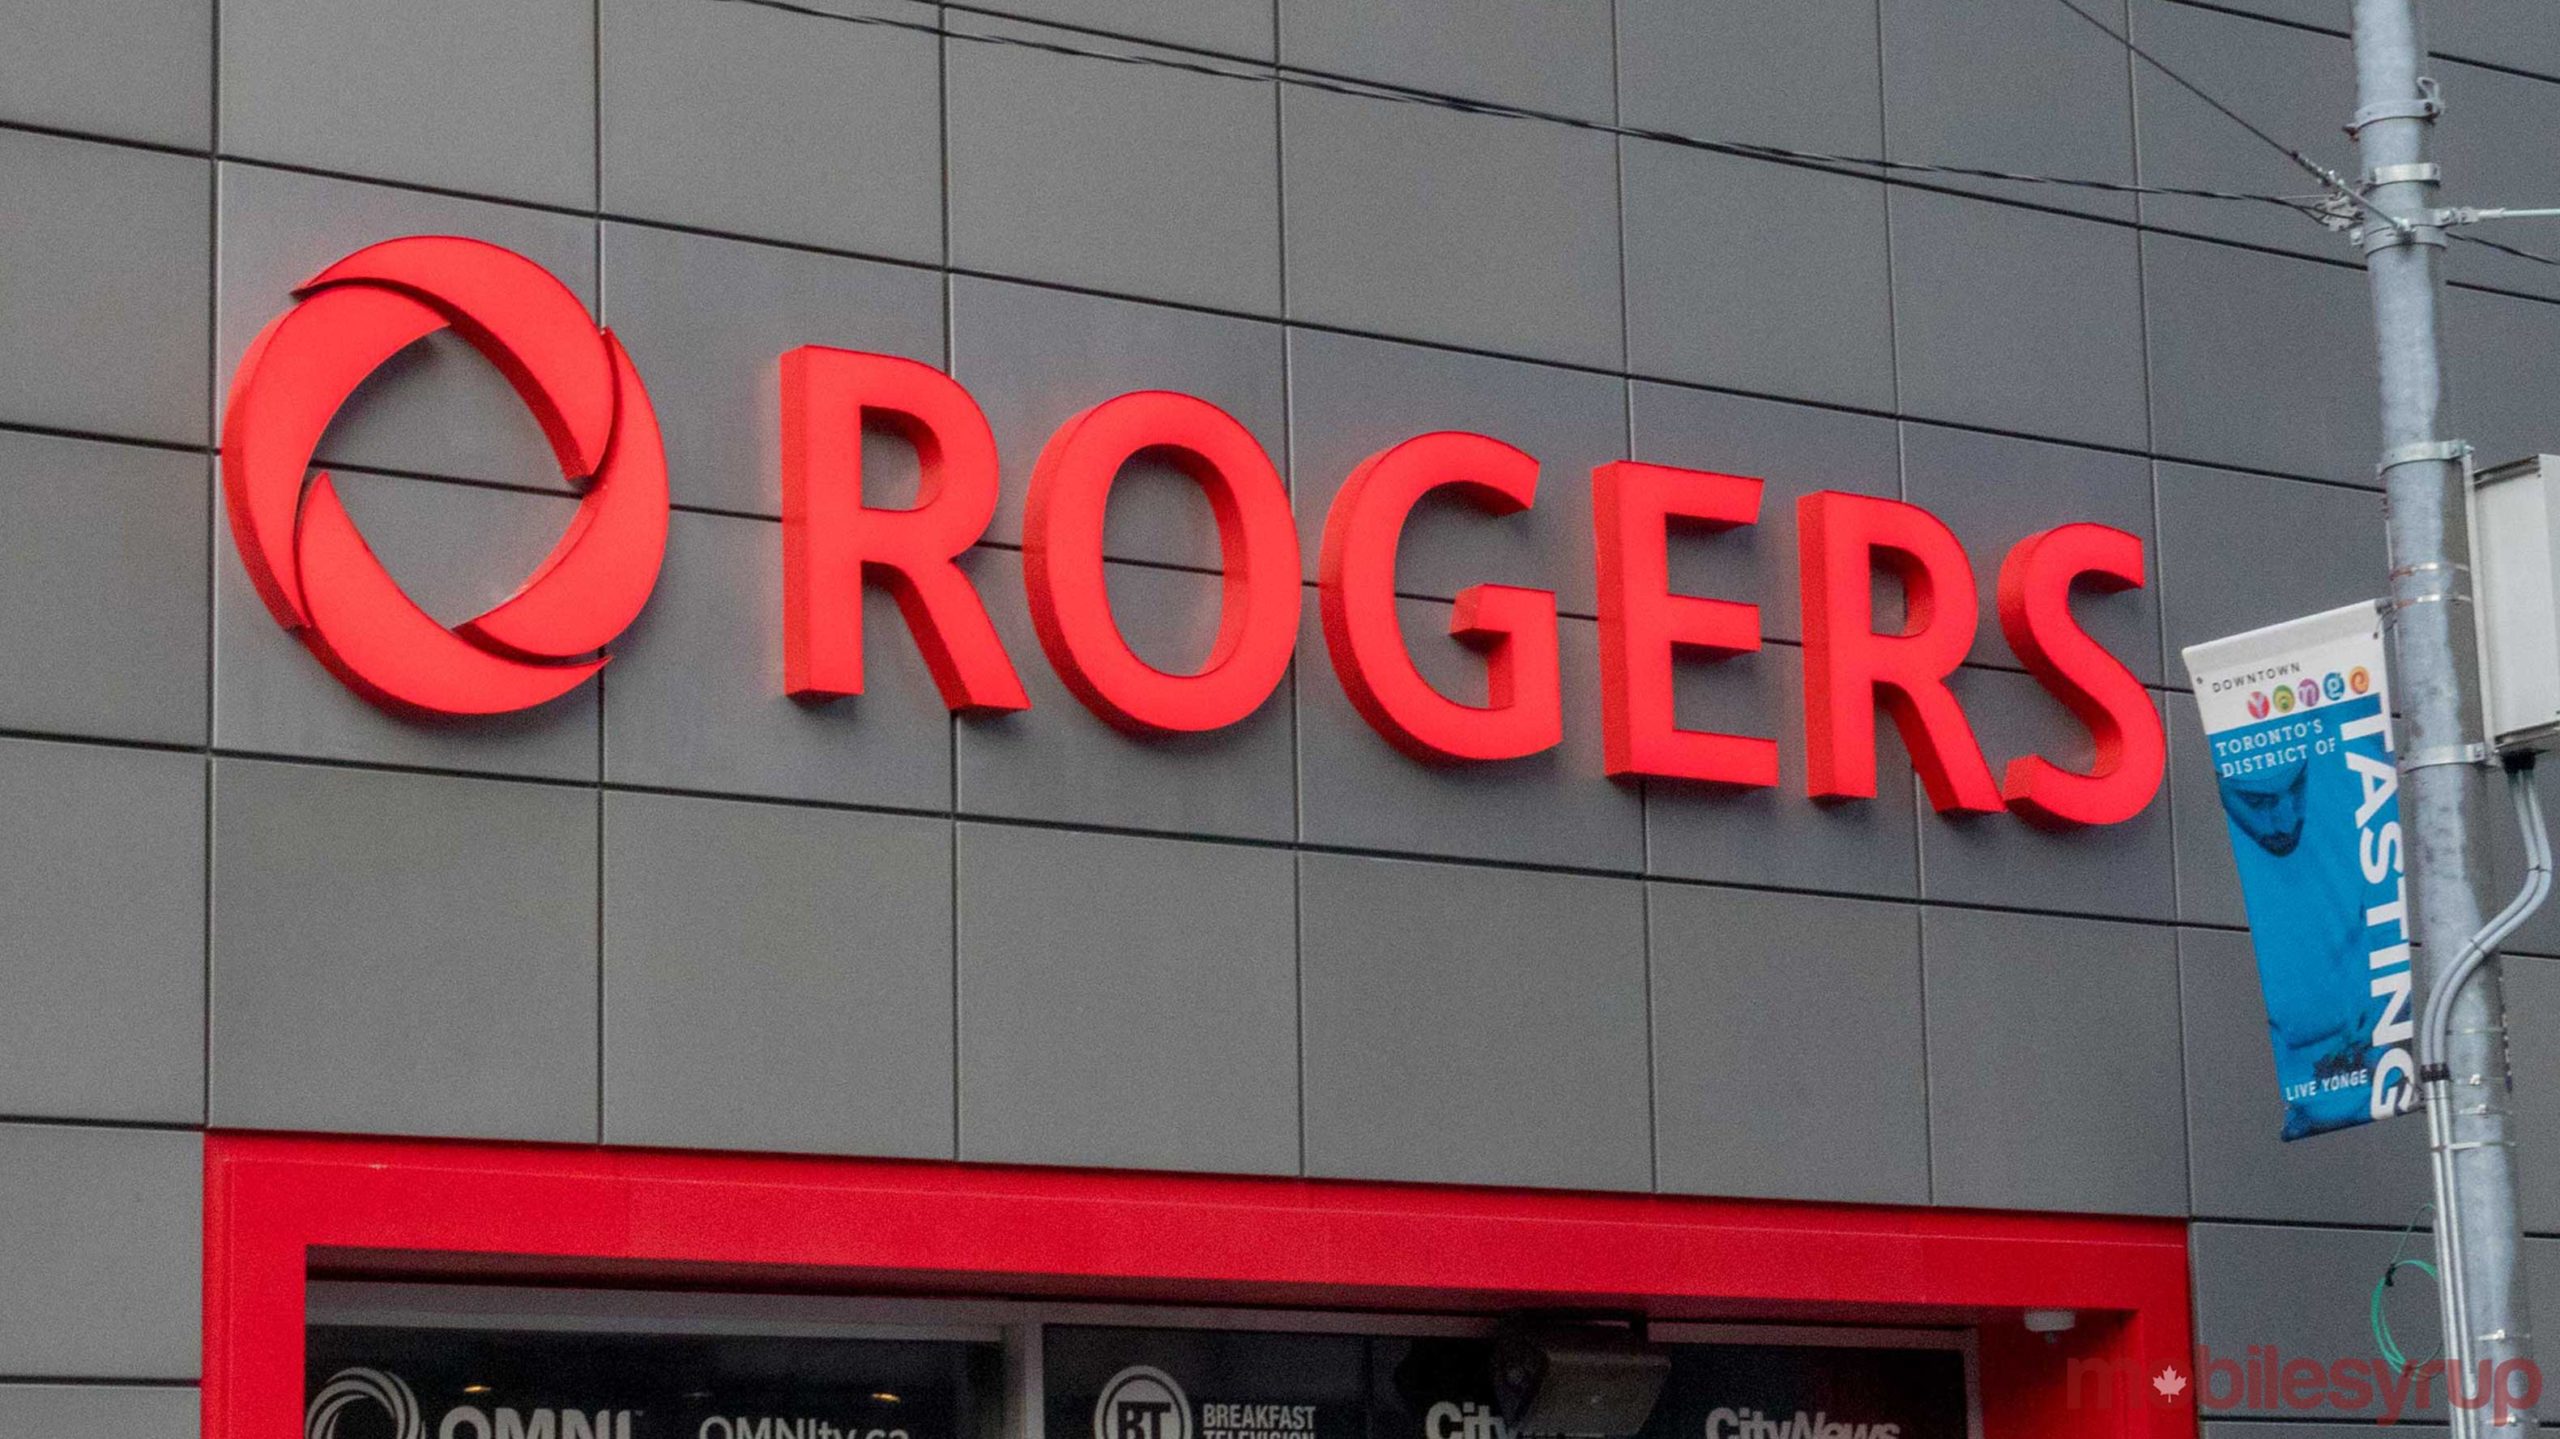 Rogers Header Revamp Scaled